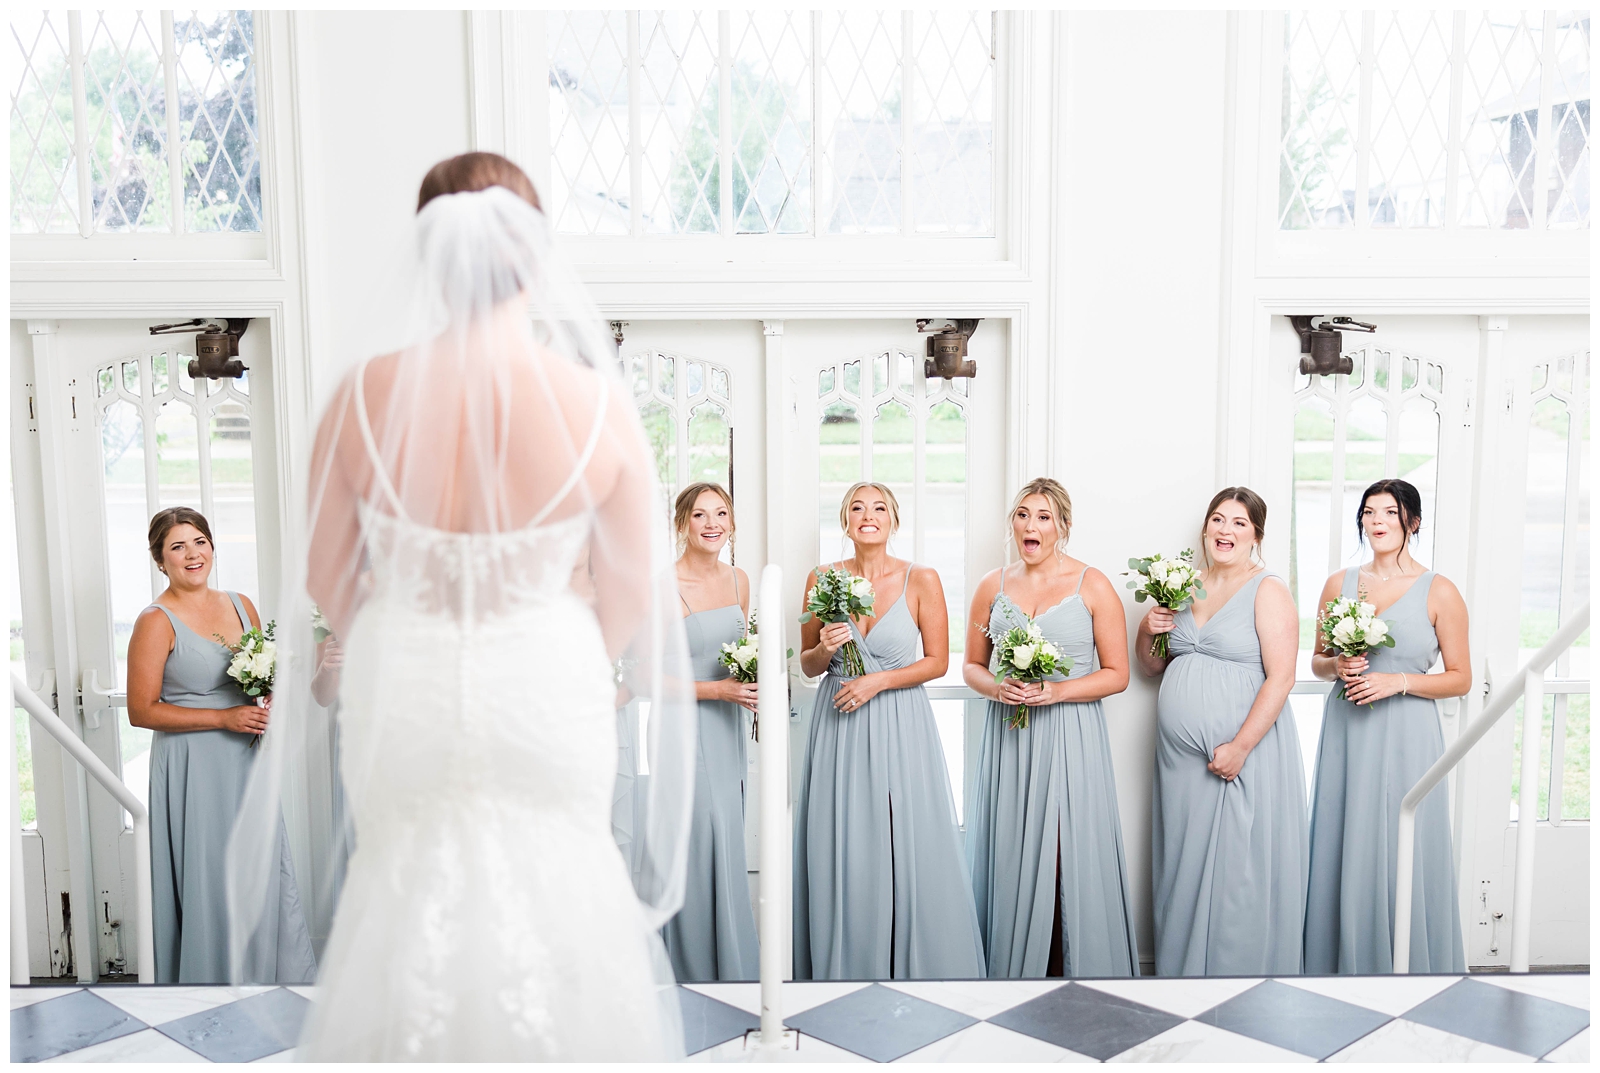 Bride and bridesmaids photos indoors